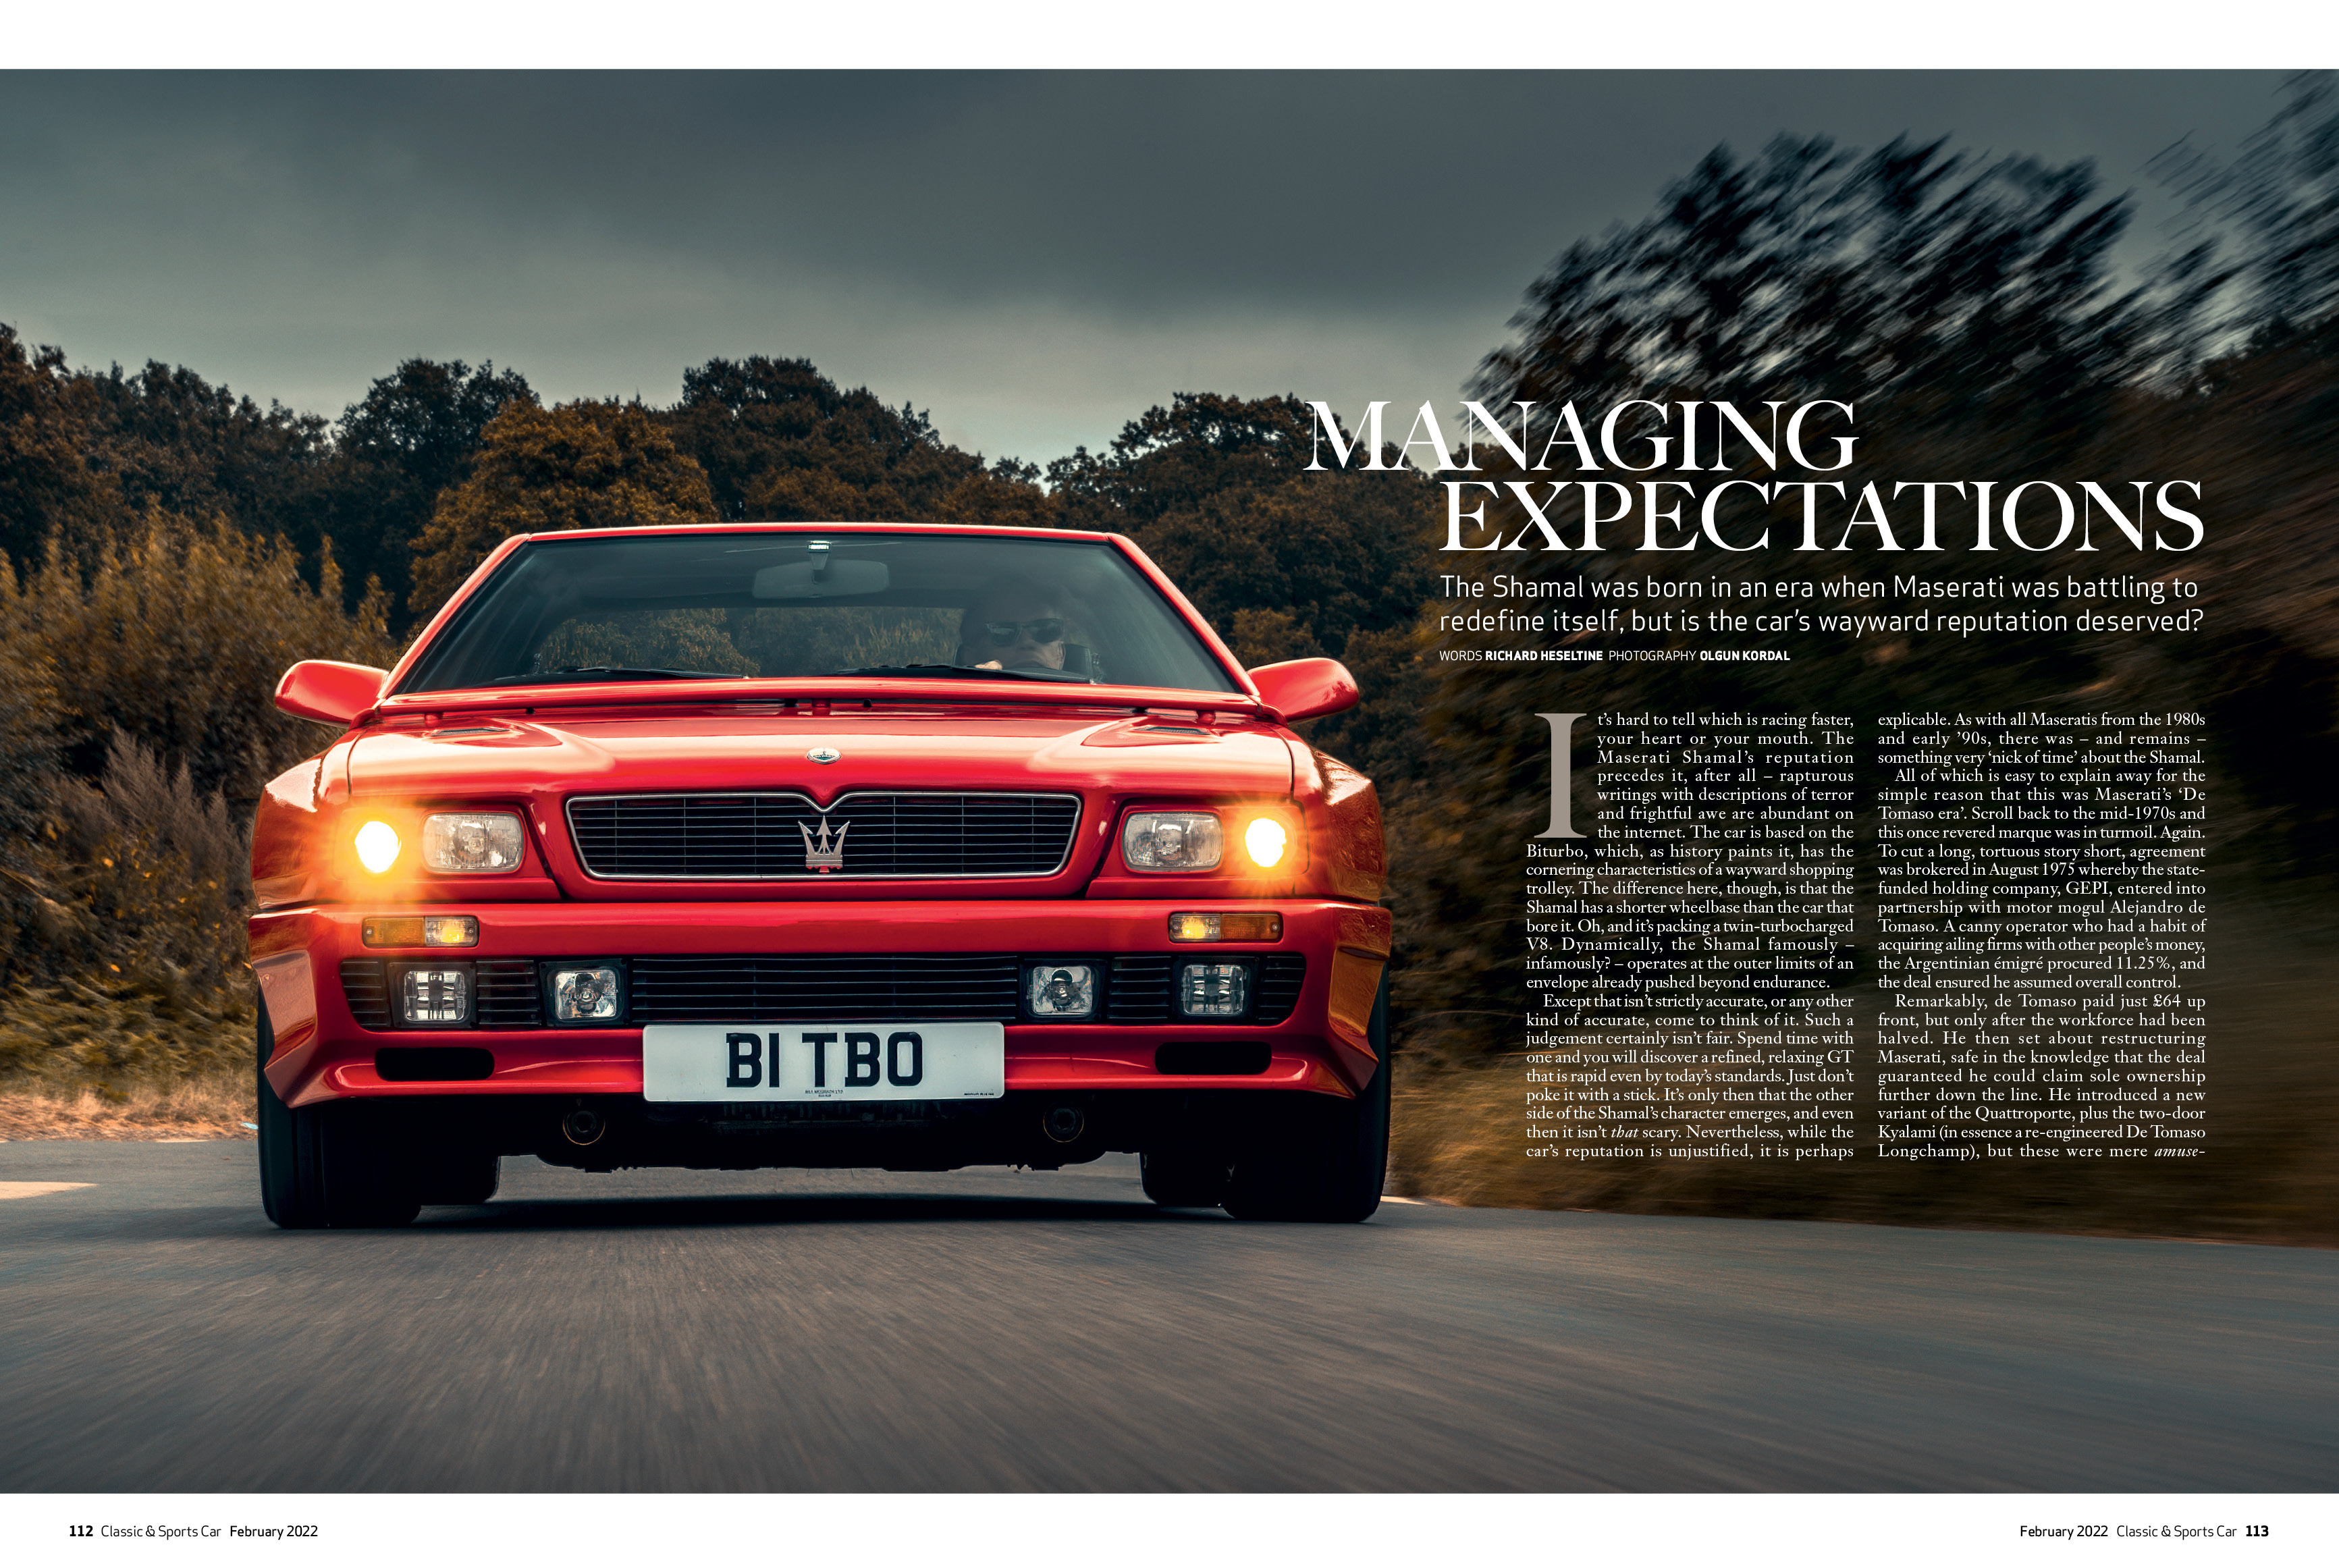 Classic & Sports Car – Cobra legends: inside the February 2022 issue of C&SC